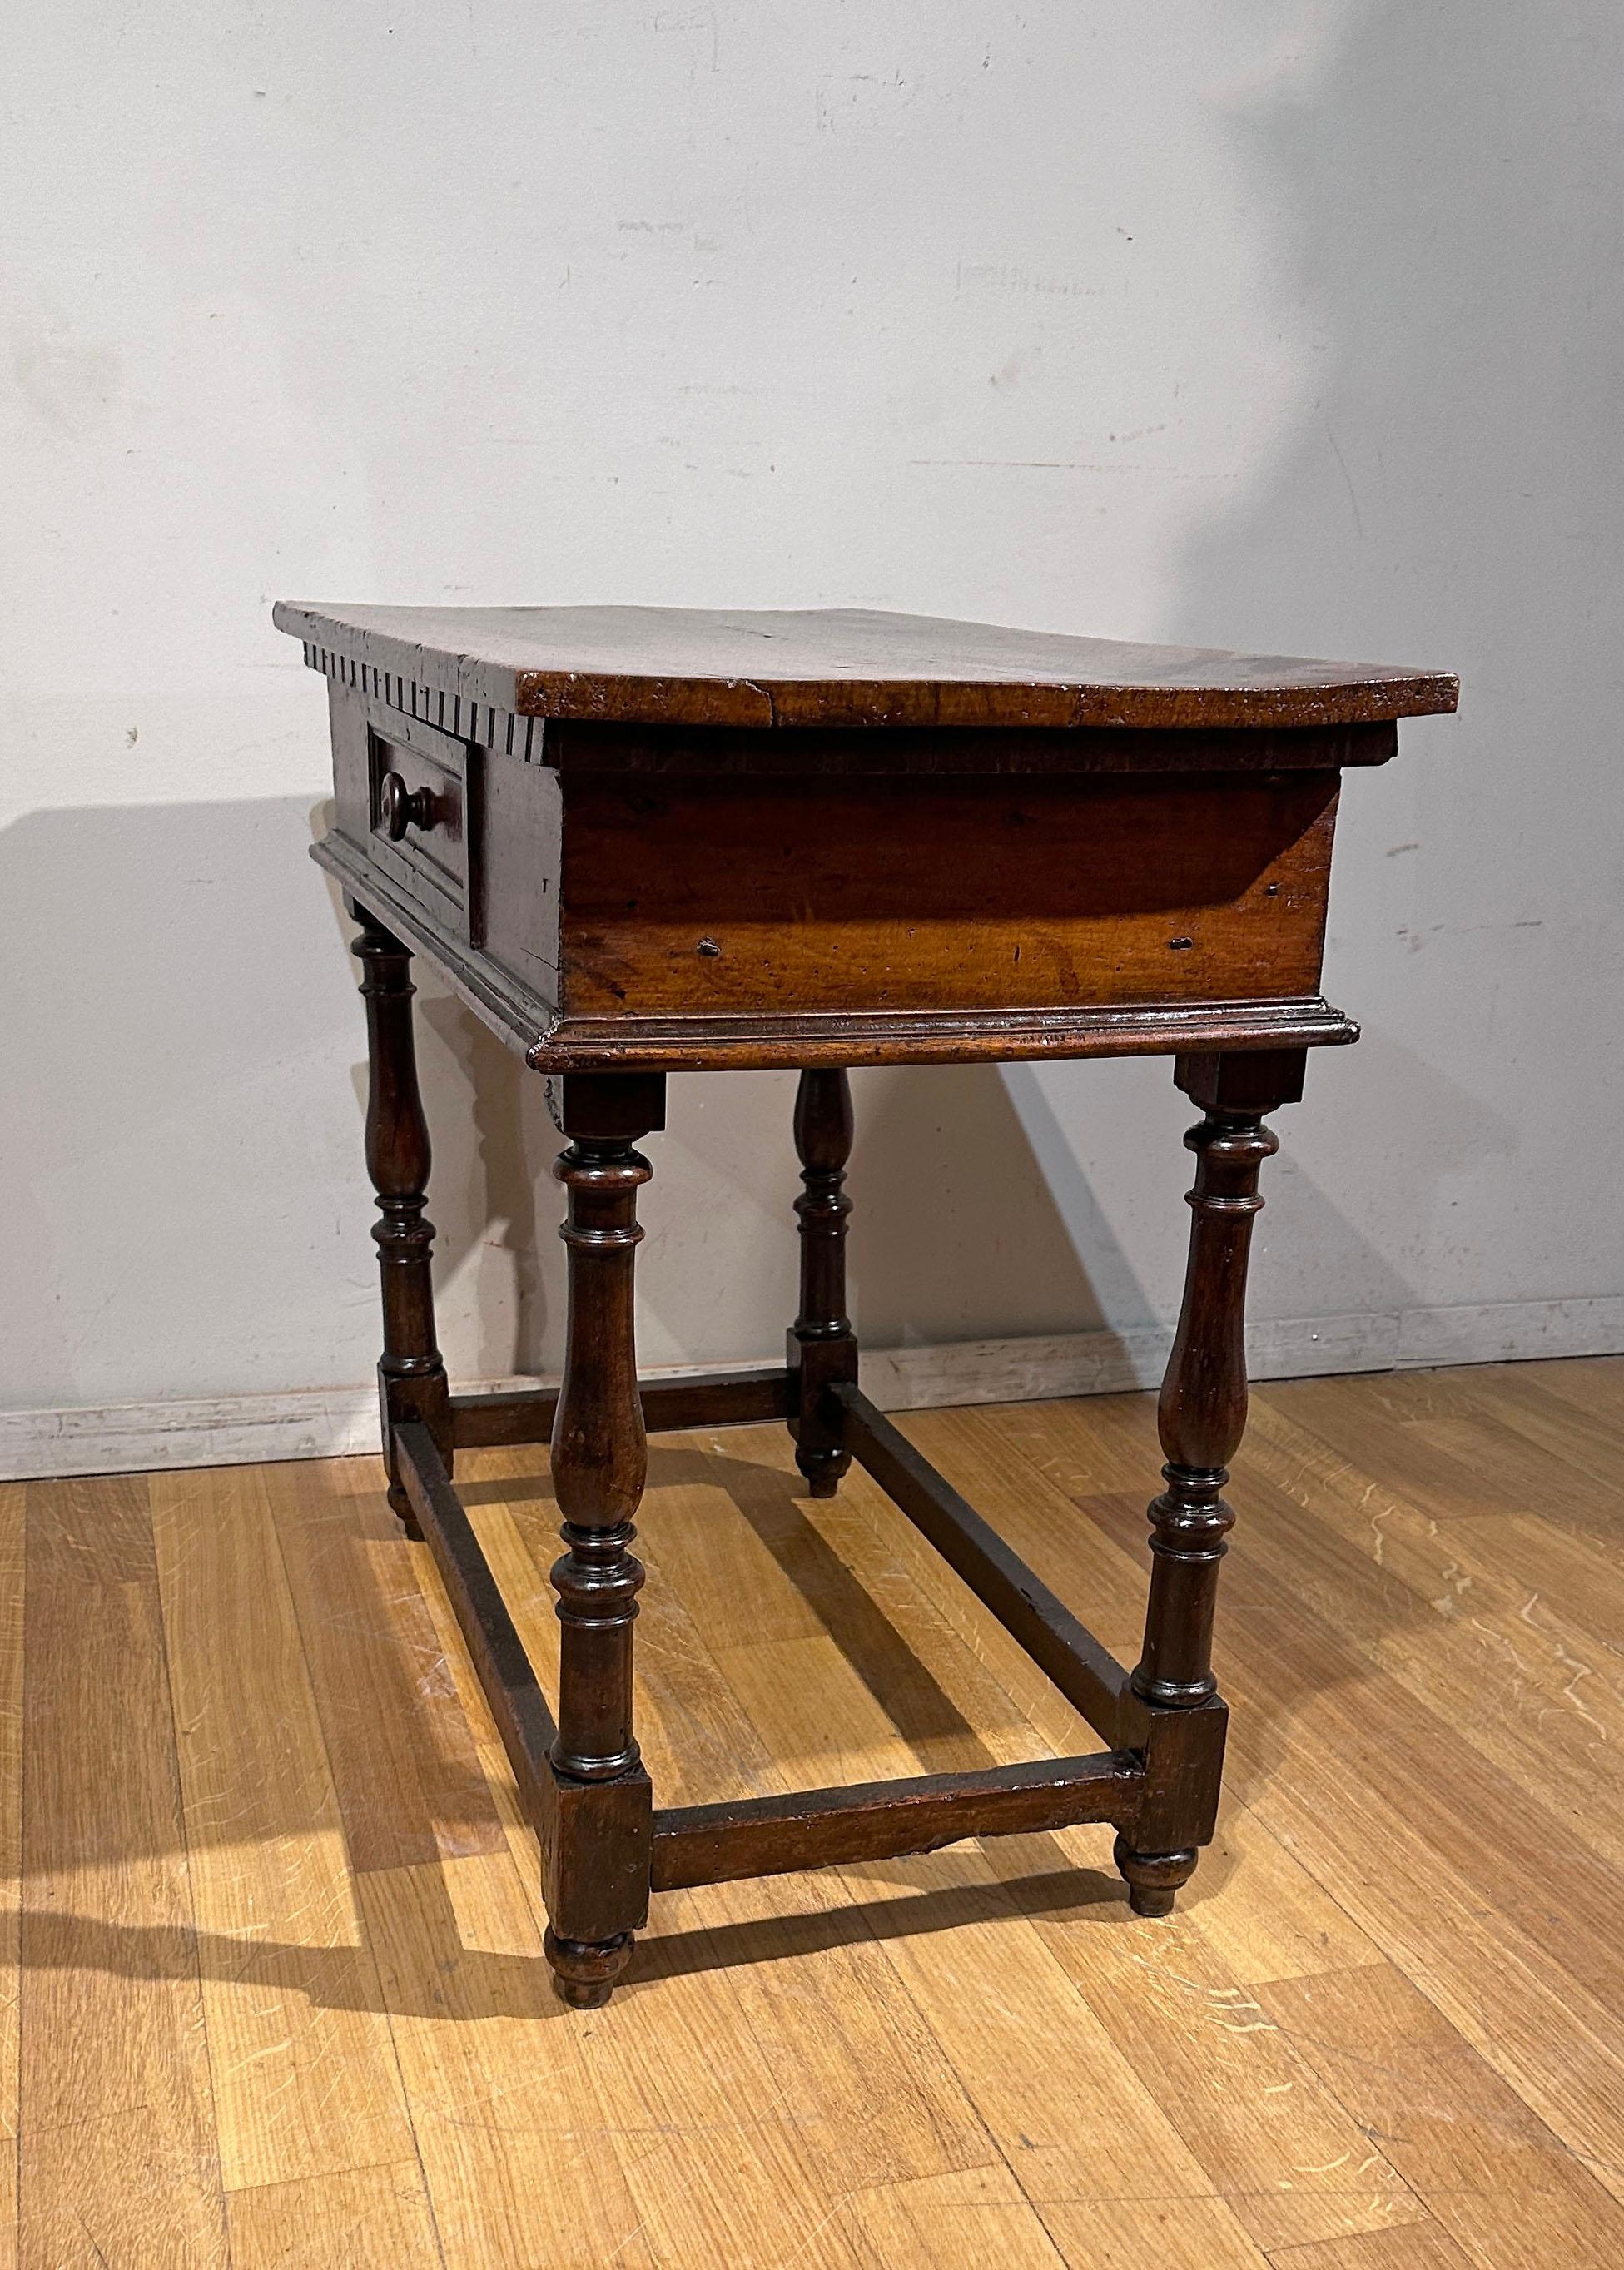 16th century table